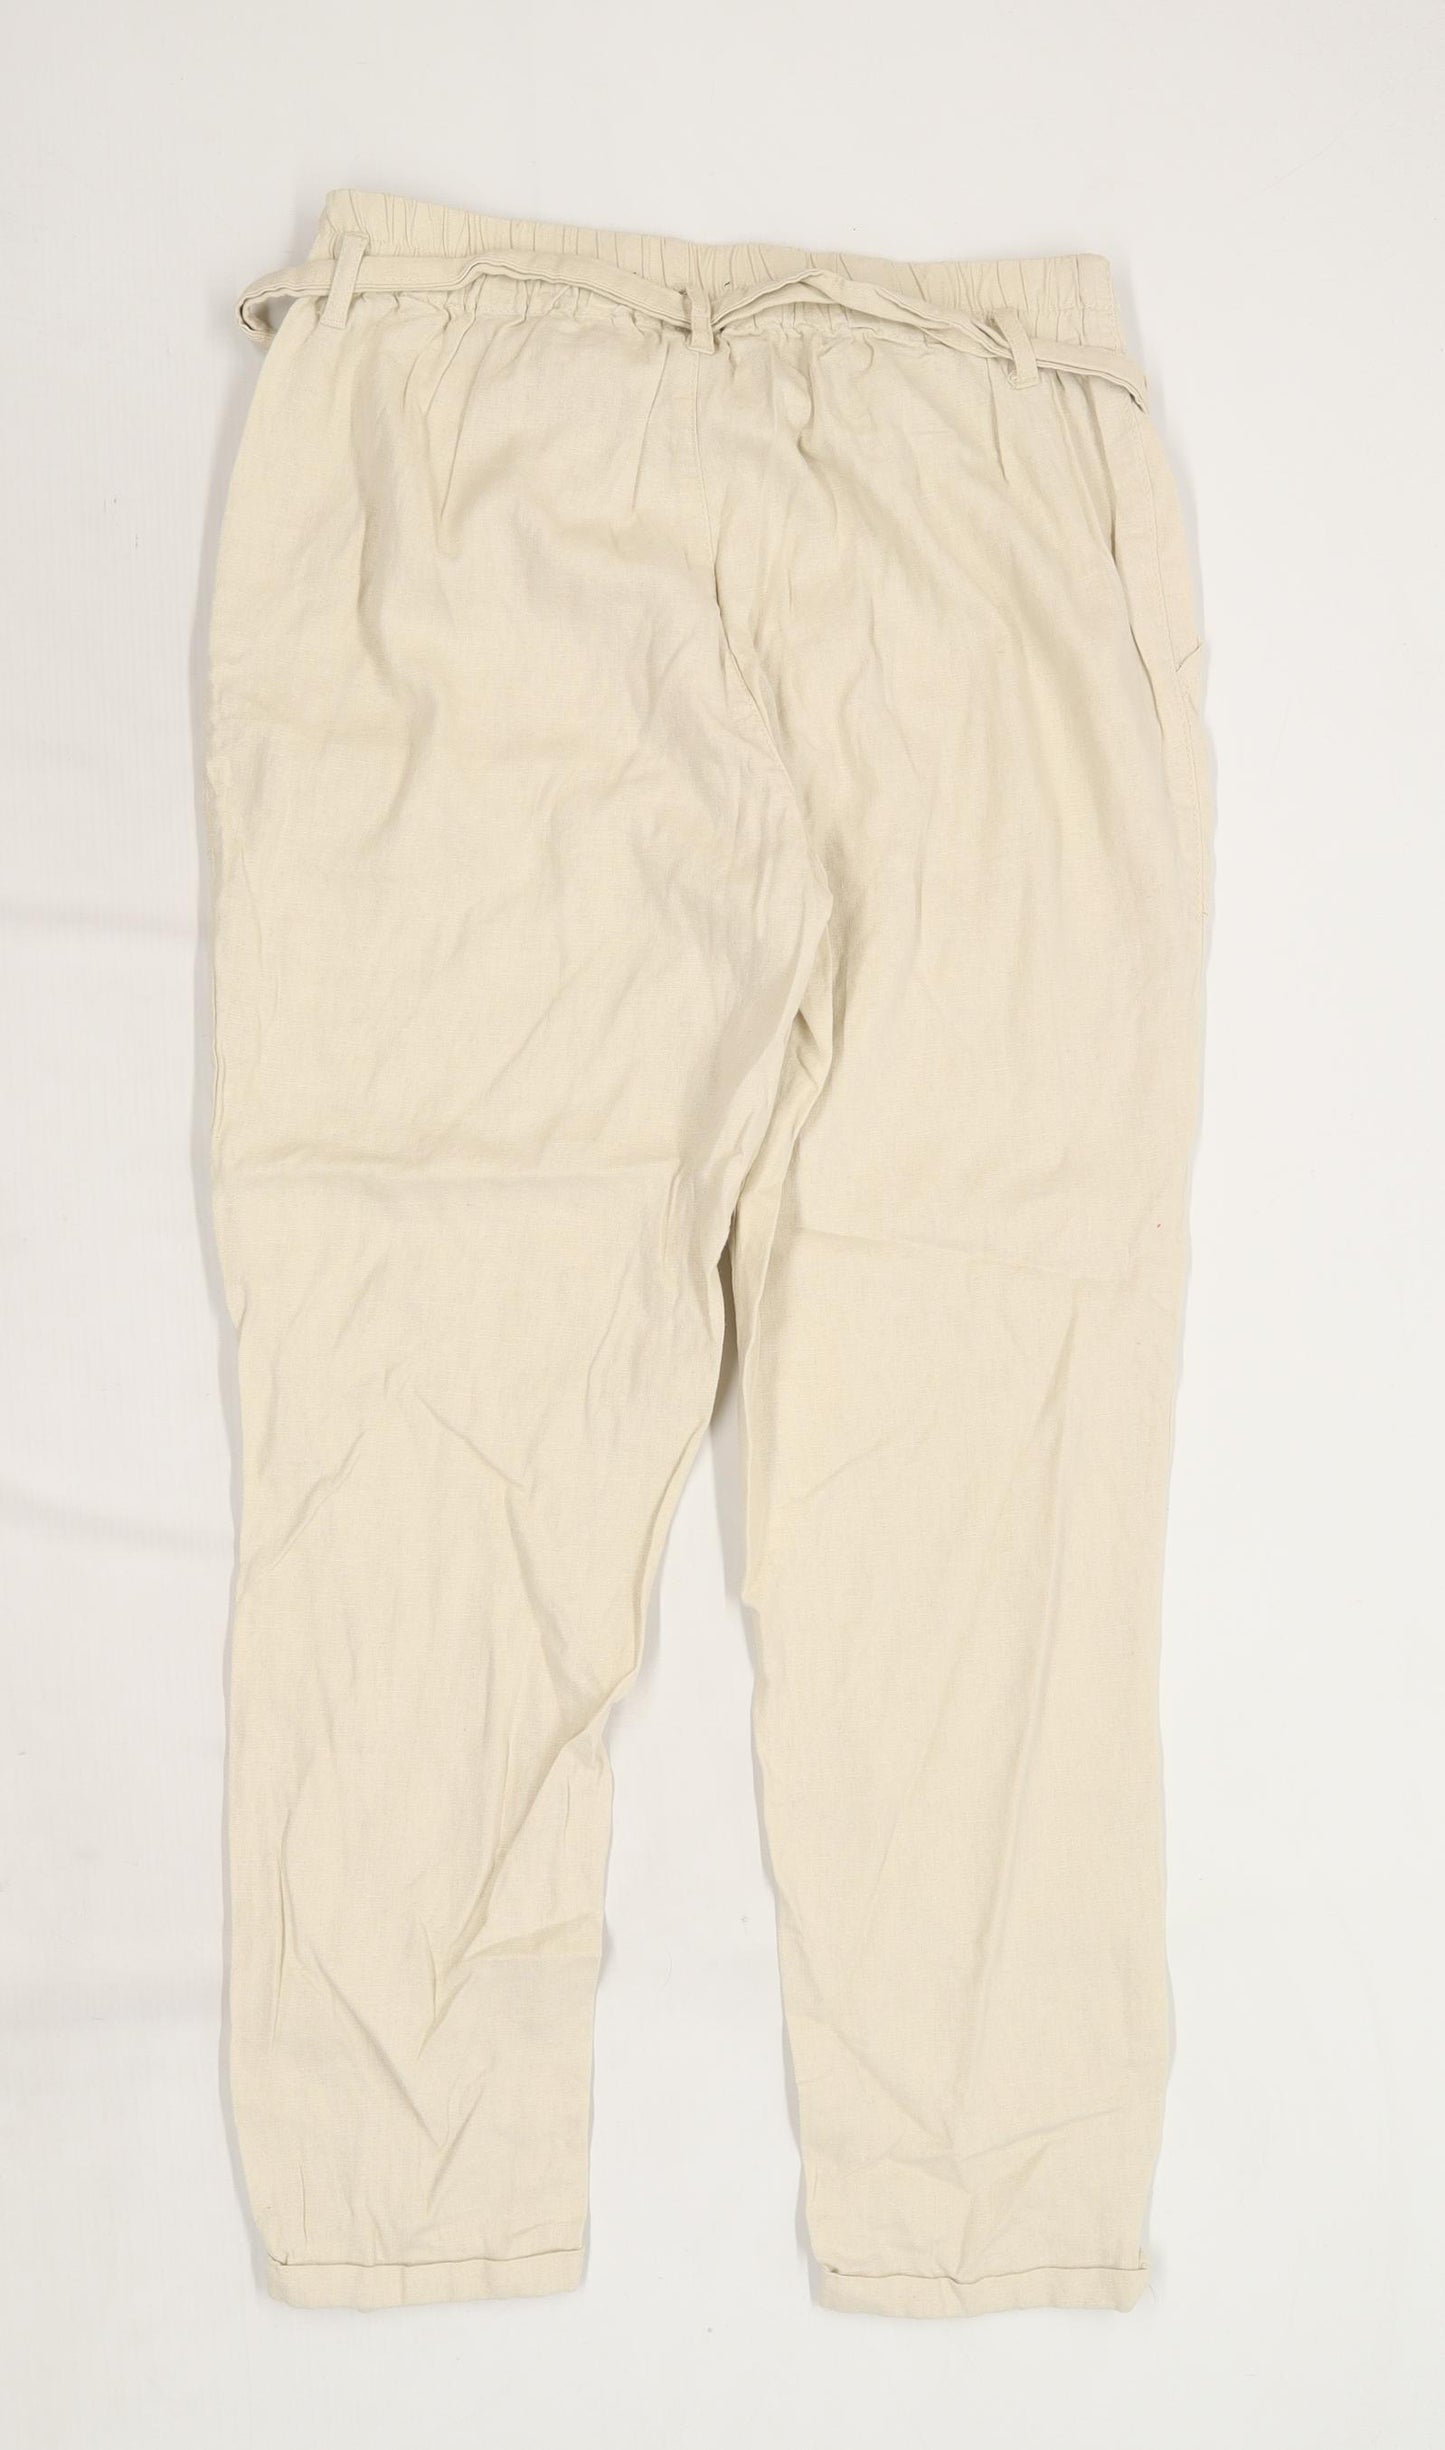 Womens Primark Beige Linen Blend Trousers Size 12/L26